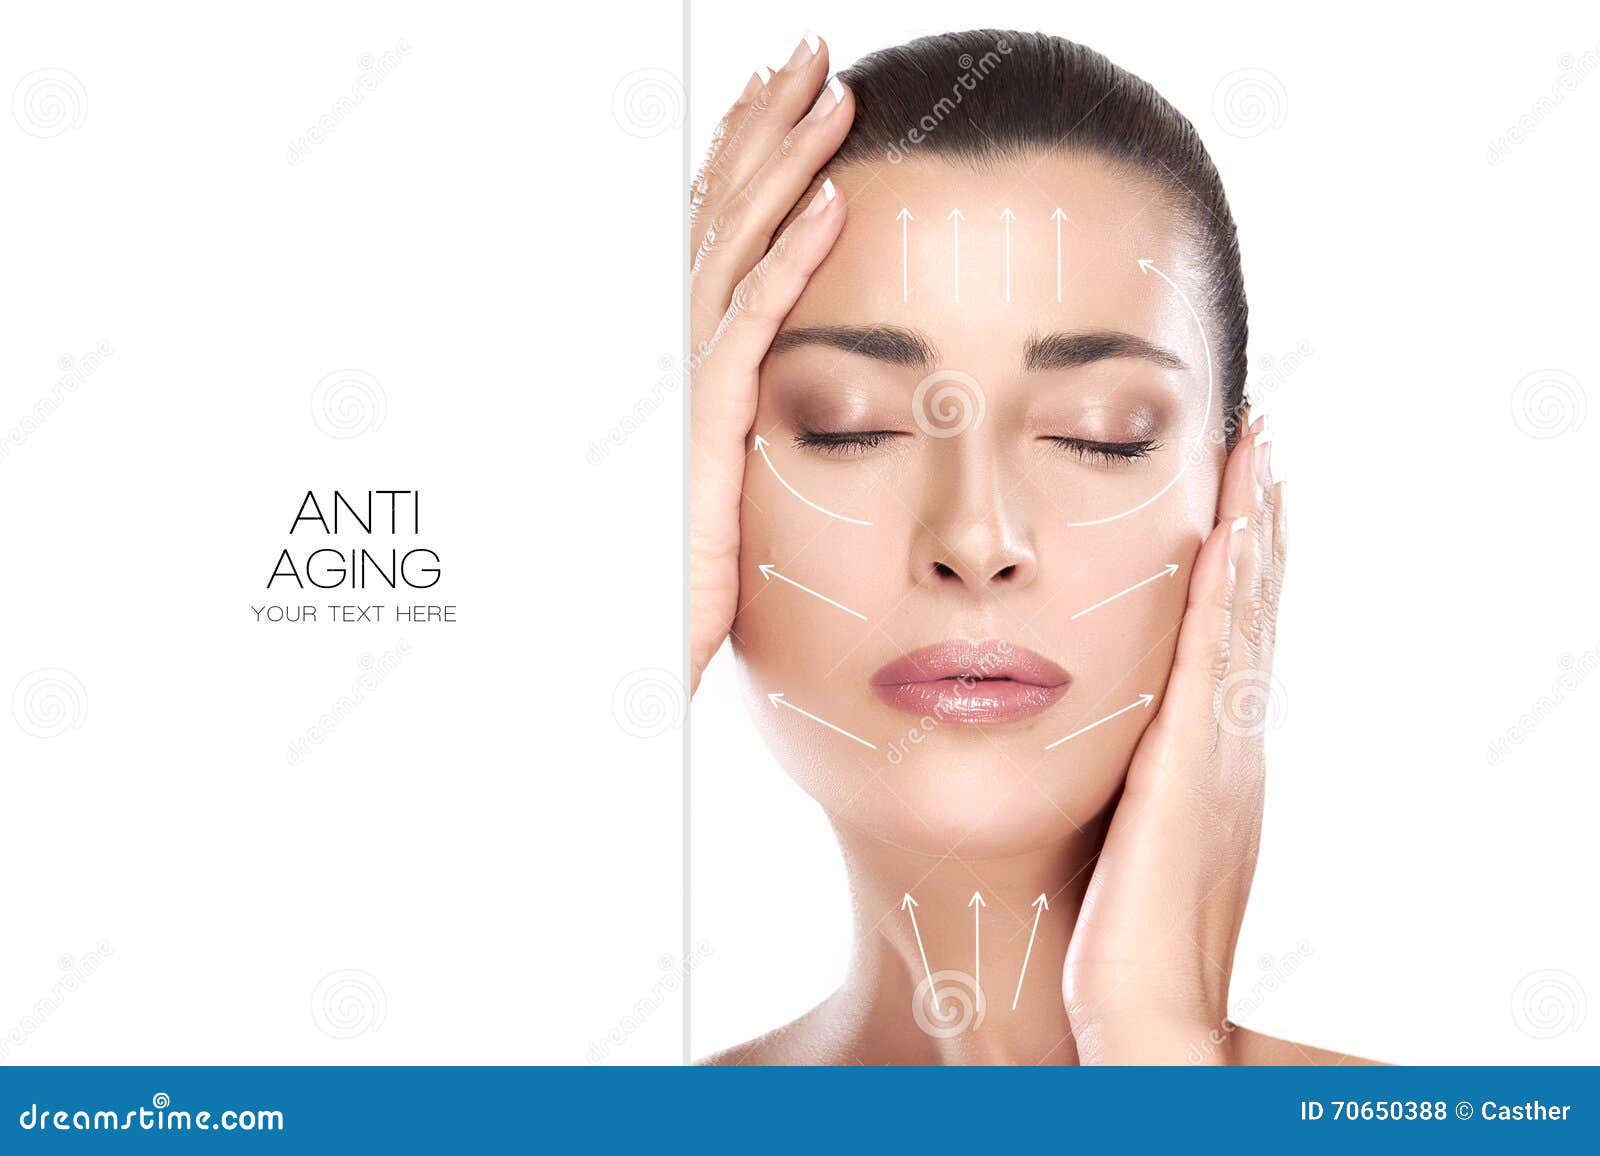 anti aging modellek képek